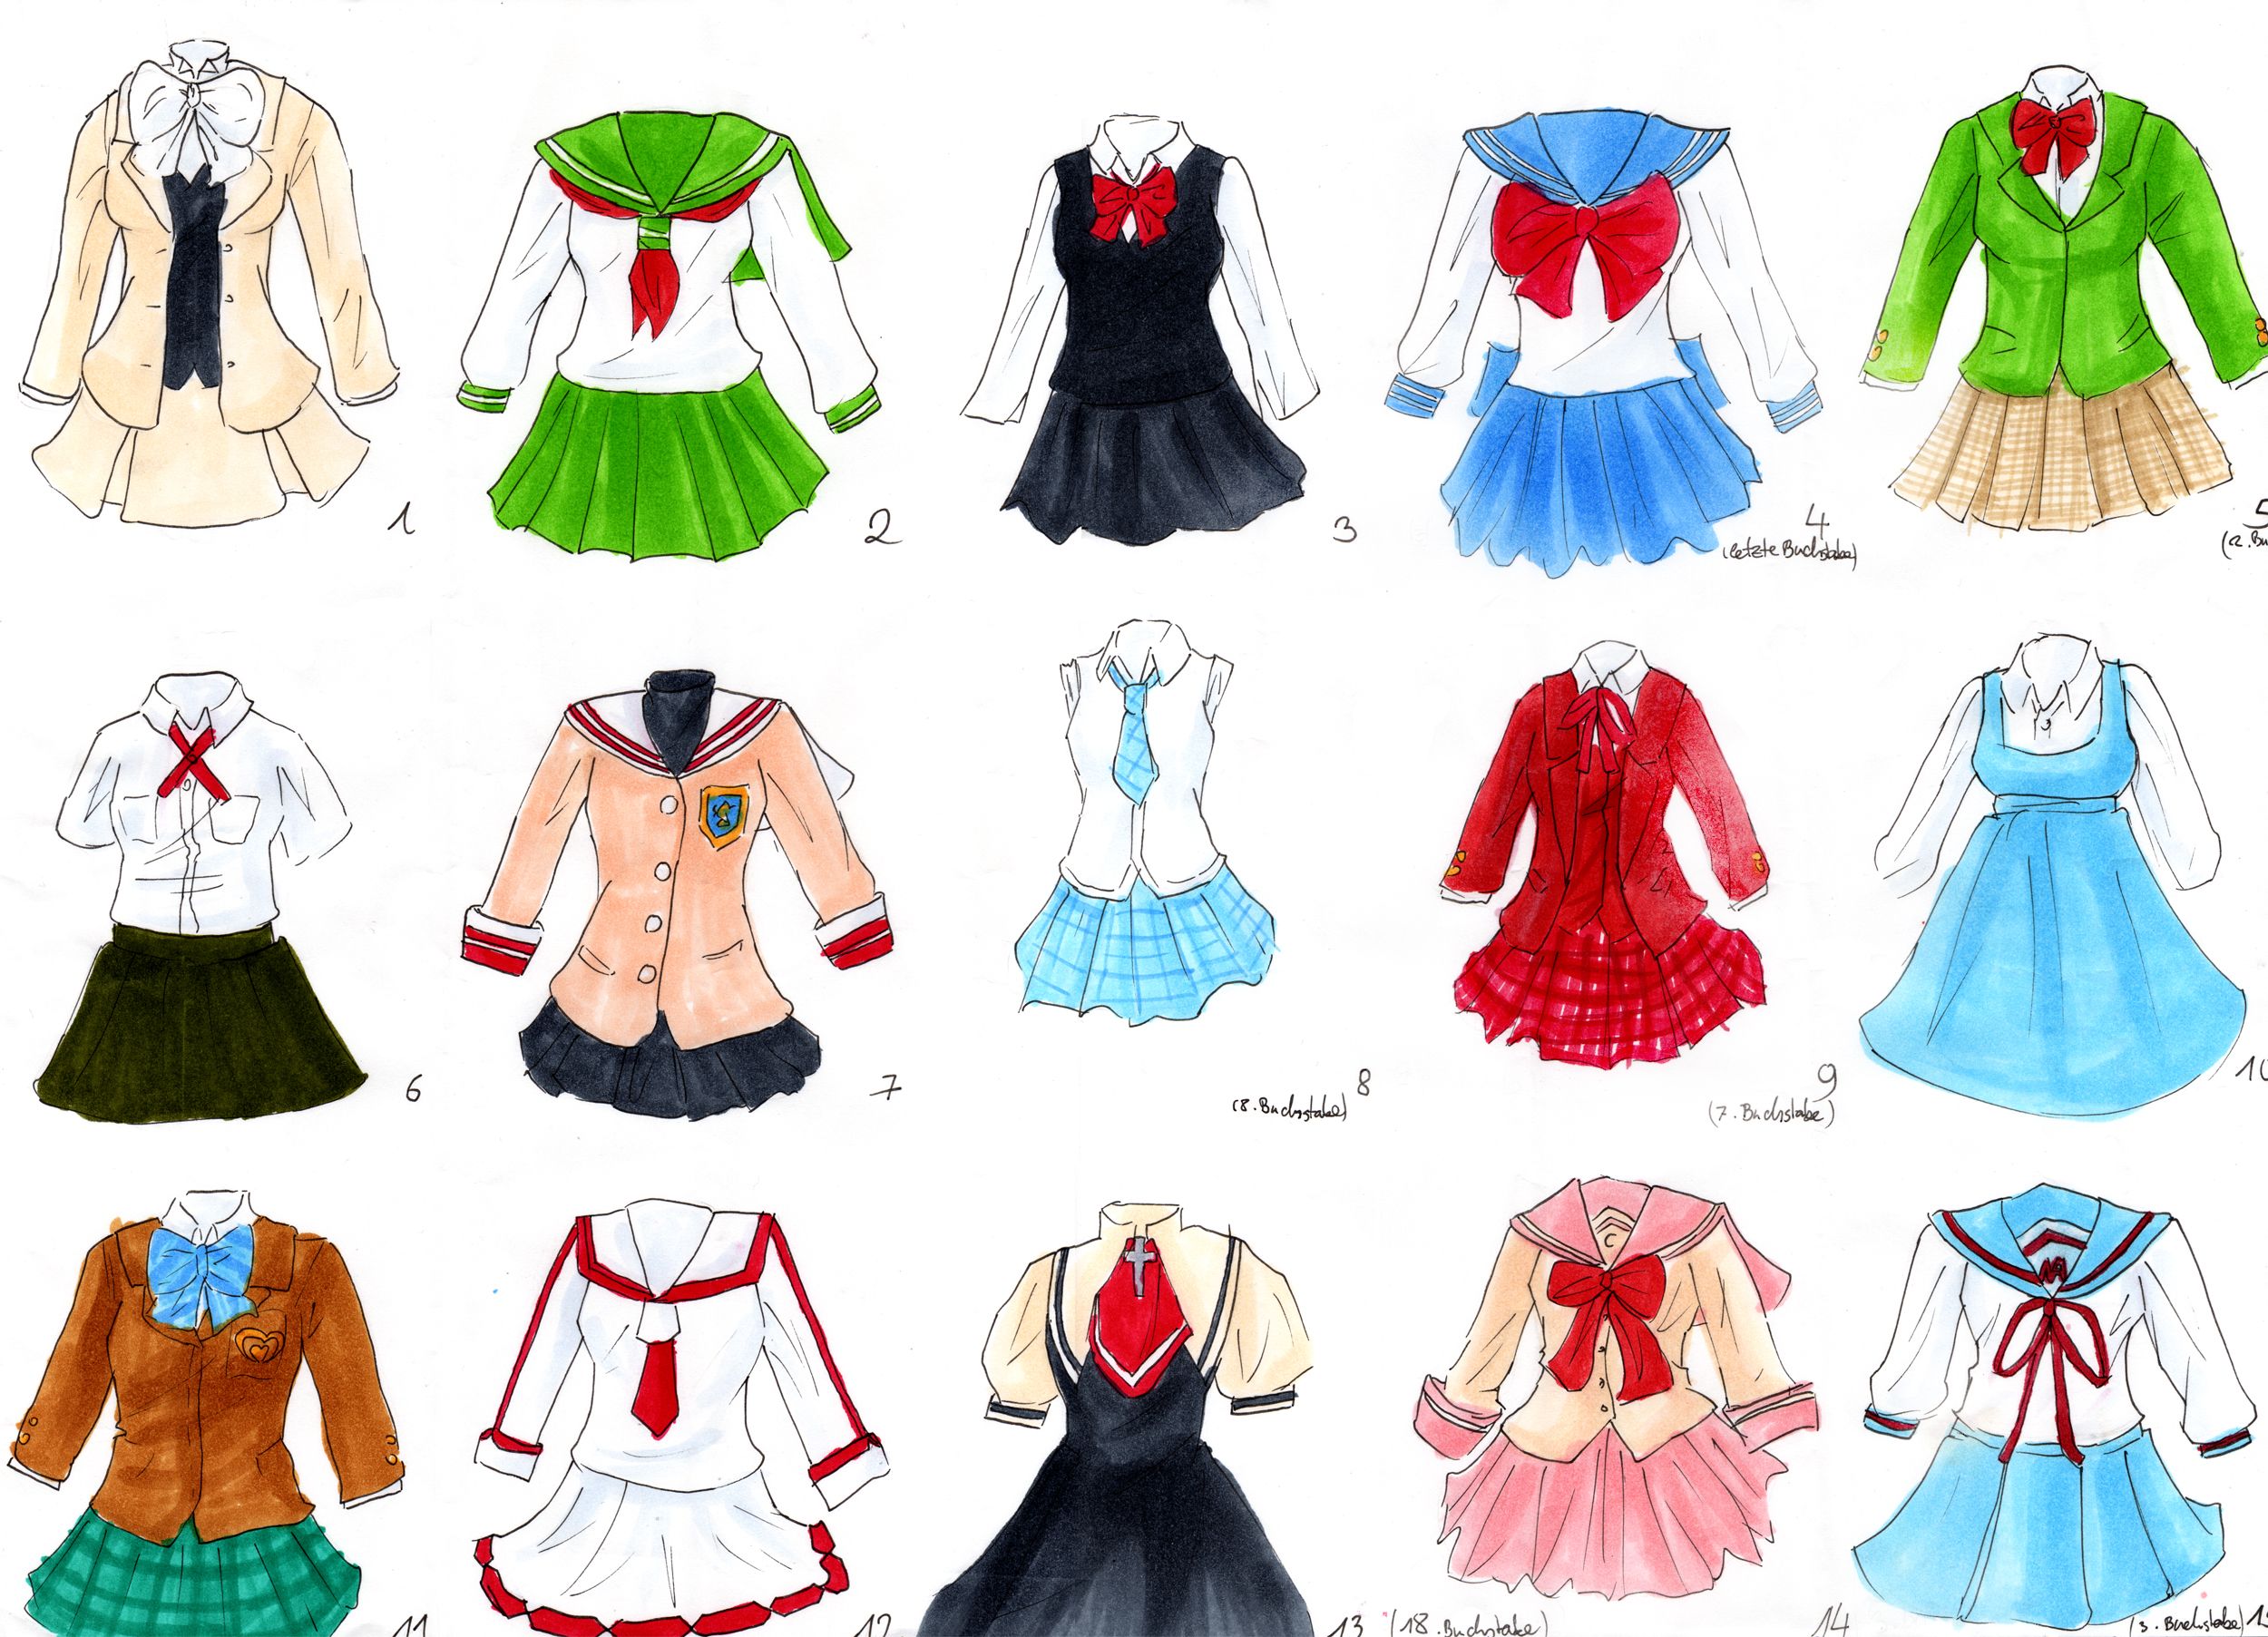 Anime Uniform Design